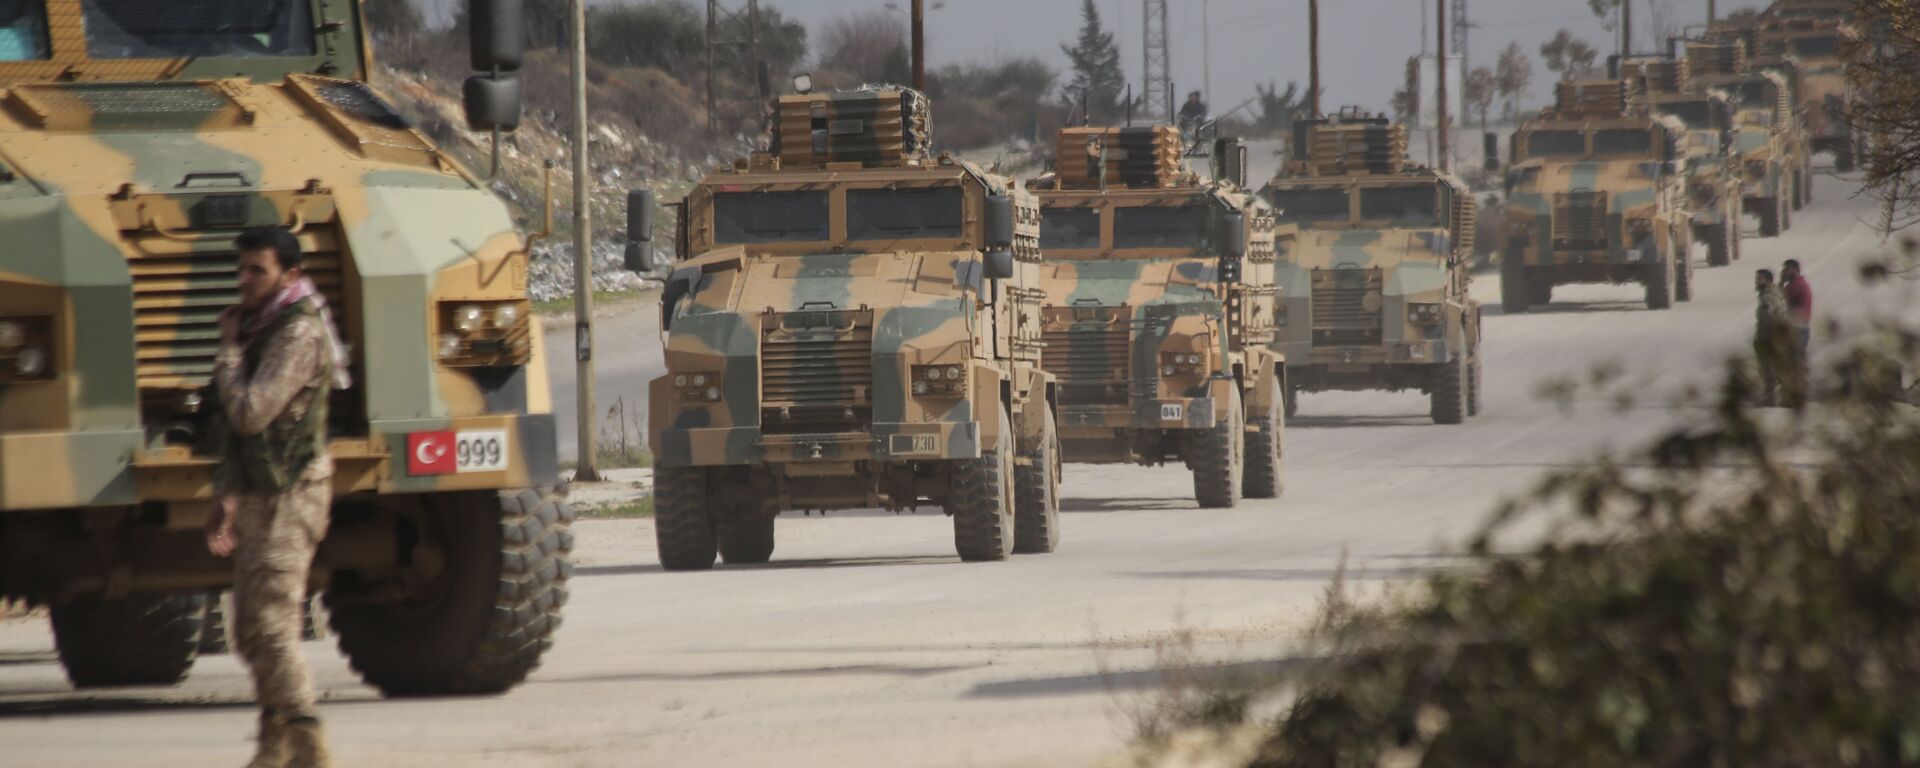 Turkish military convoy drives in Idlib province, Syria, Saturday, Feb. 22, 2020 - Sputnik International, 1920, 11.10.2021